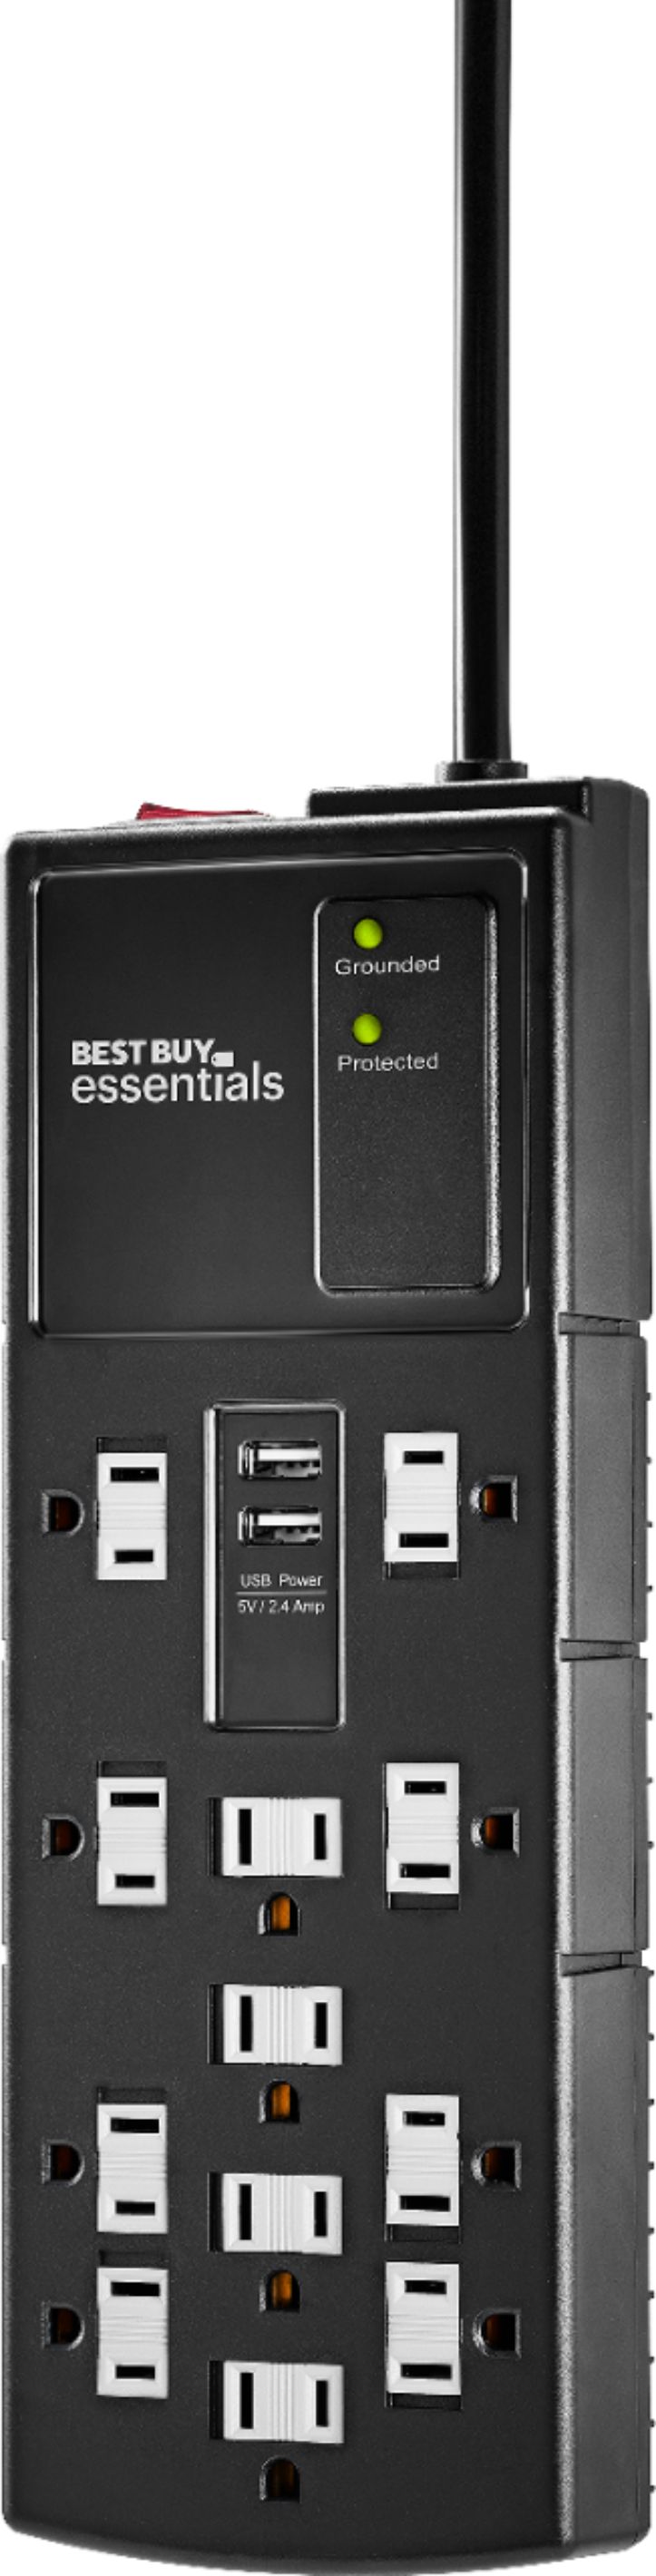 Best Buy essentials™ - 12 Outlet/2 USB 1200 Joules Surge Protector Strip - Black